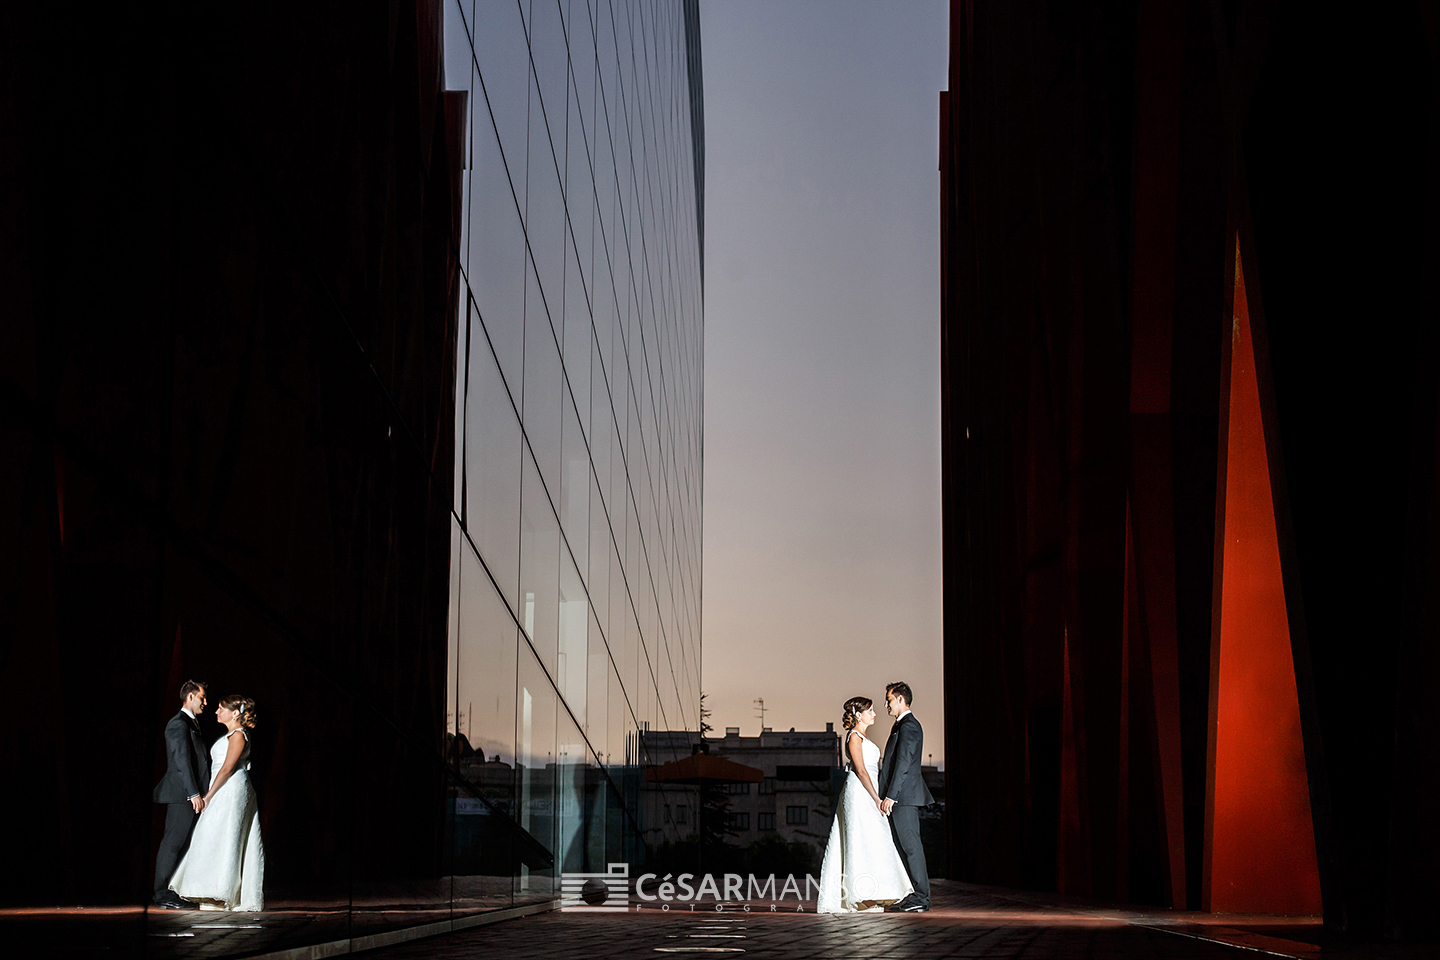 César Manso Fotógrafo: Fotógrafos de boda en Burgos - Boda%20AlejandrayJairo-43.JPG